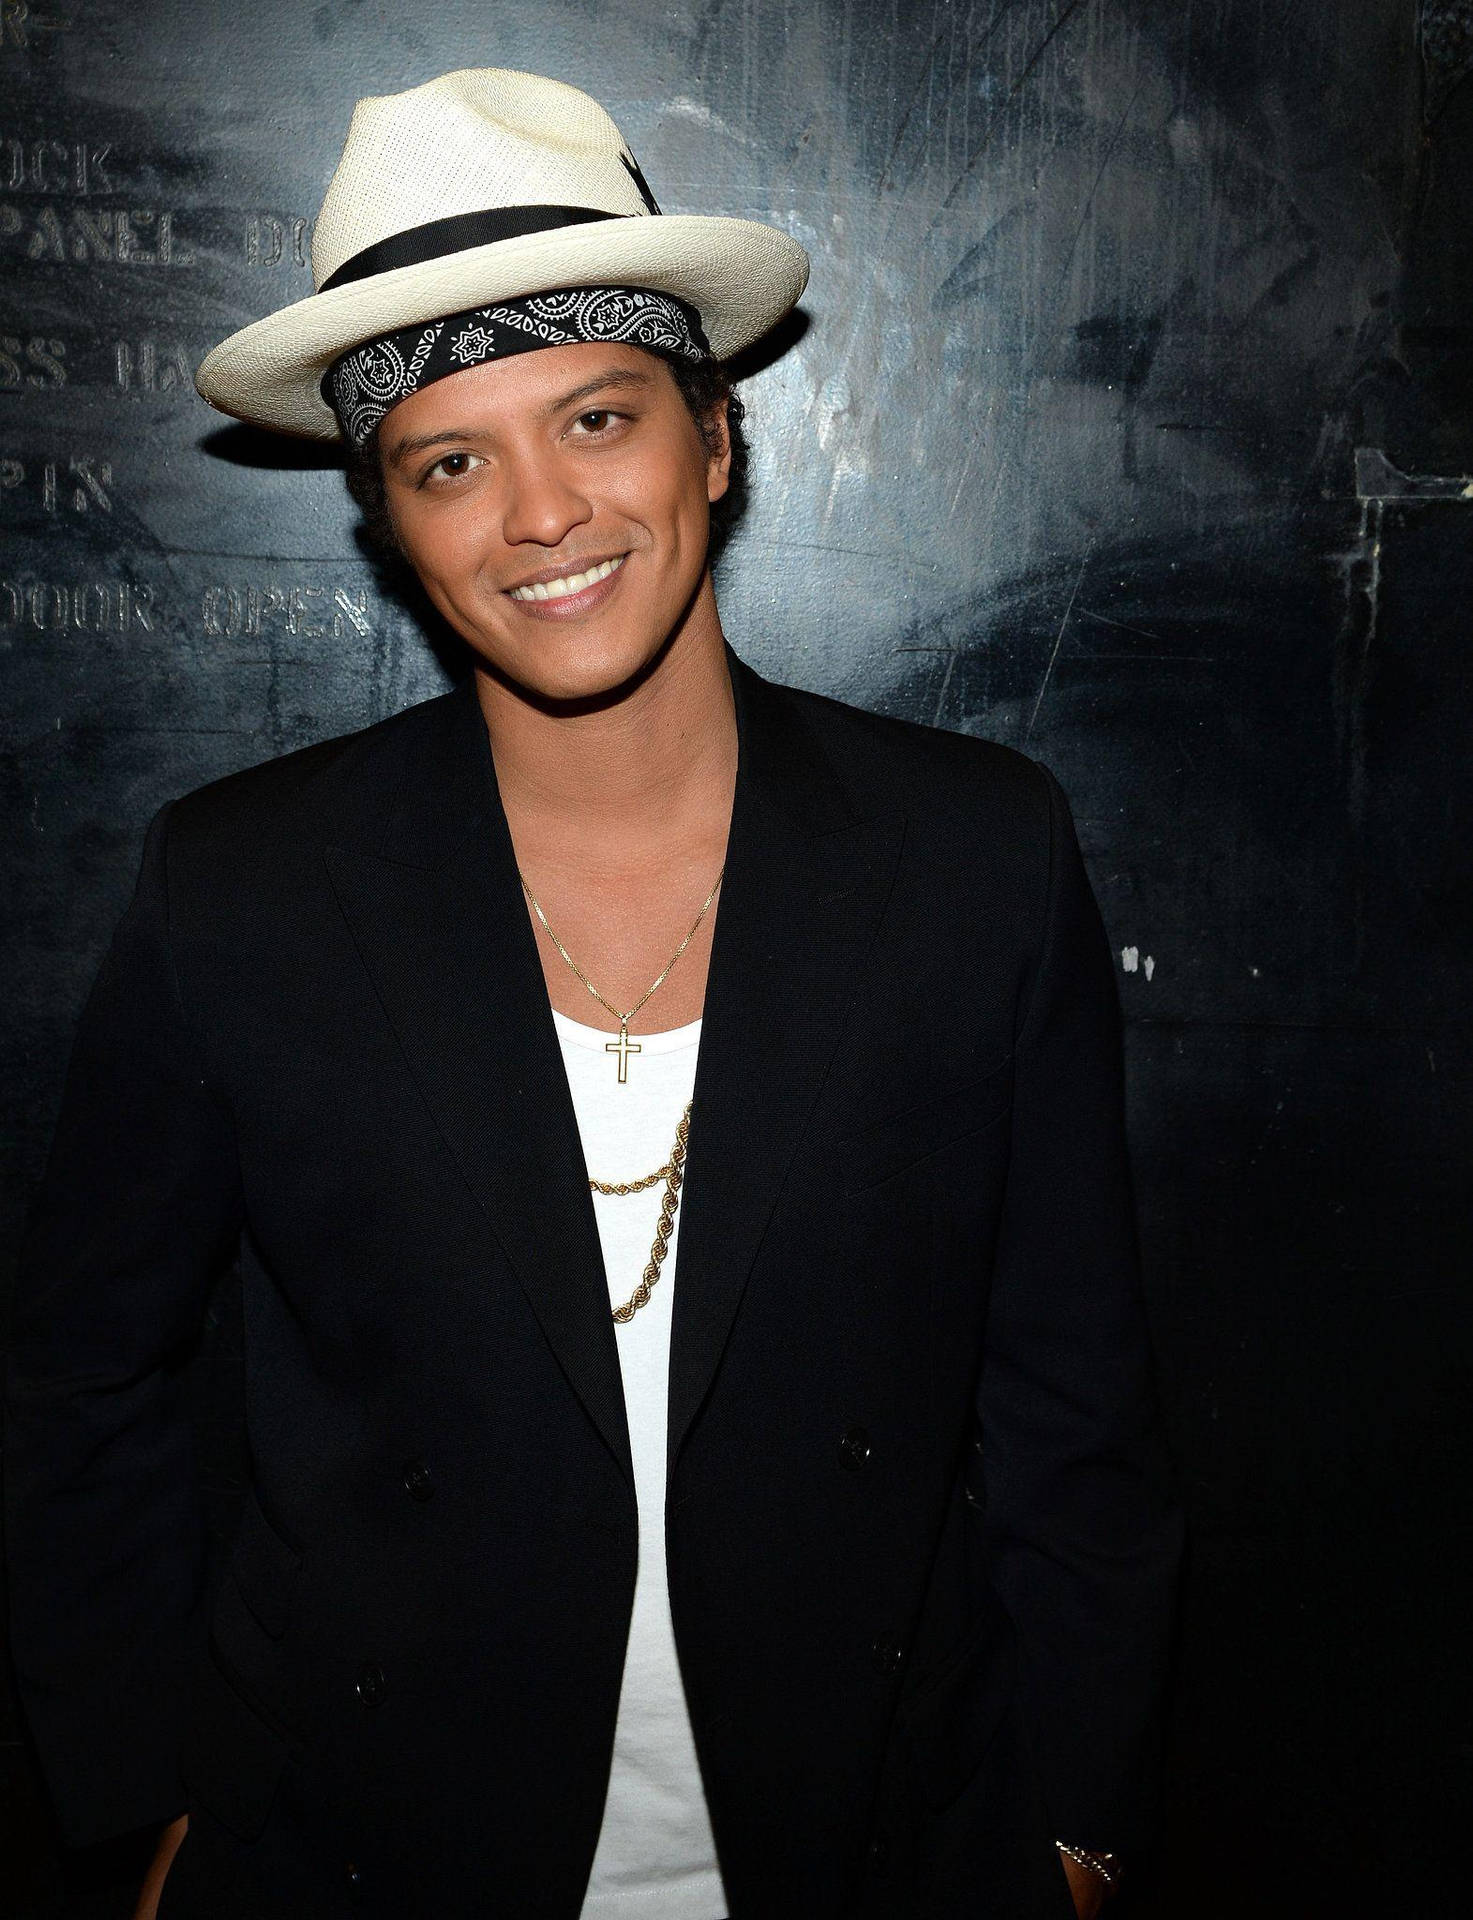 Smiling Bruno Mars